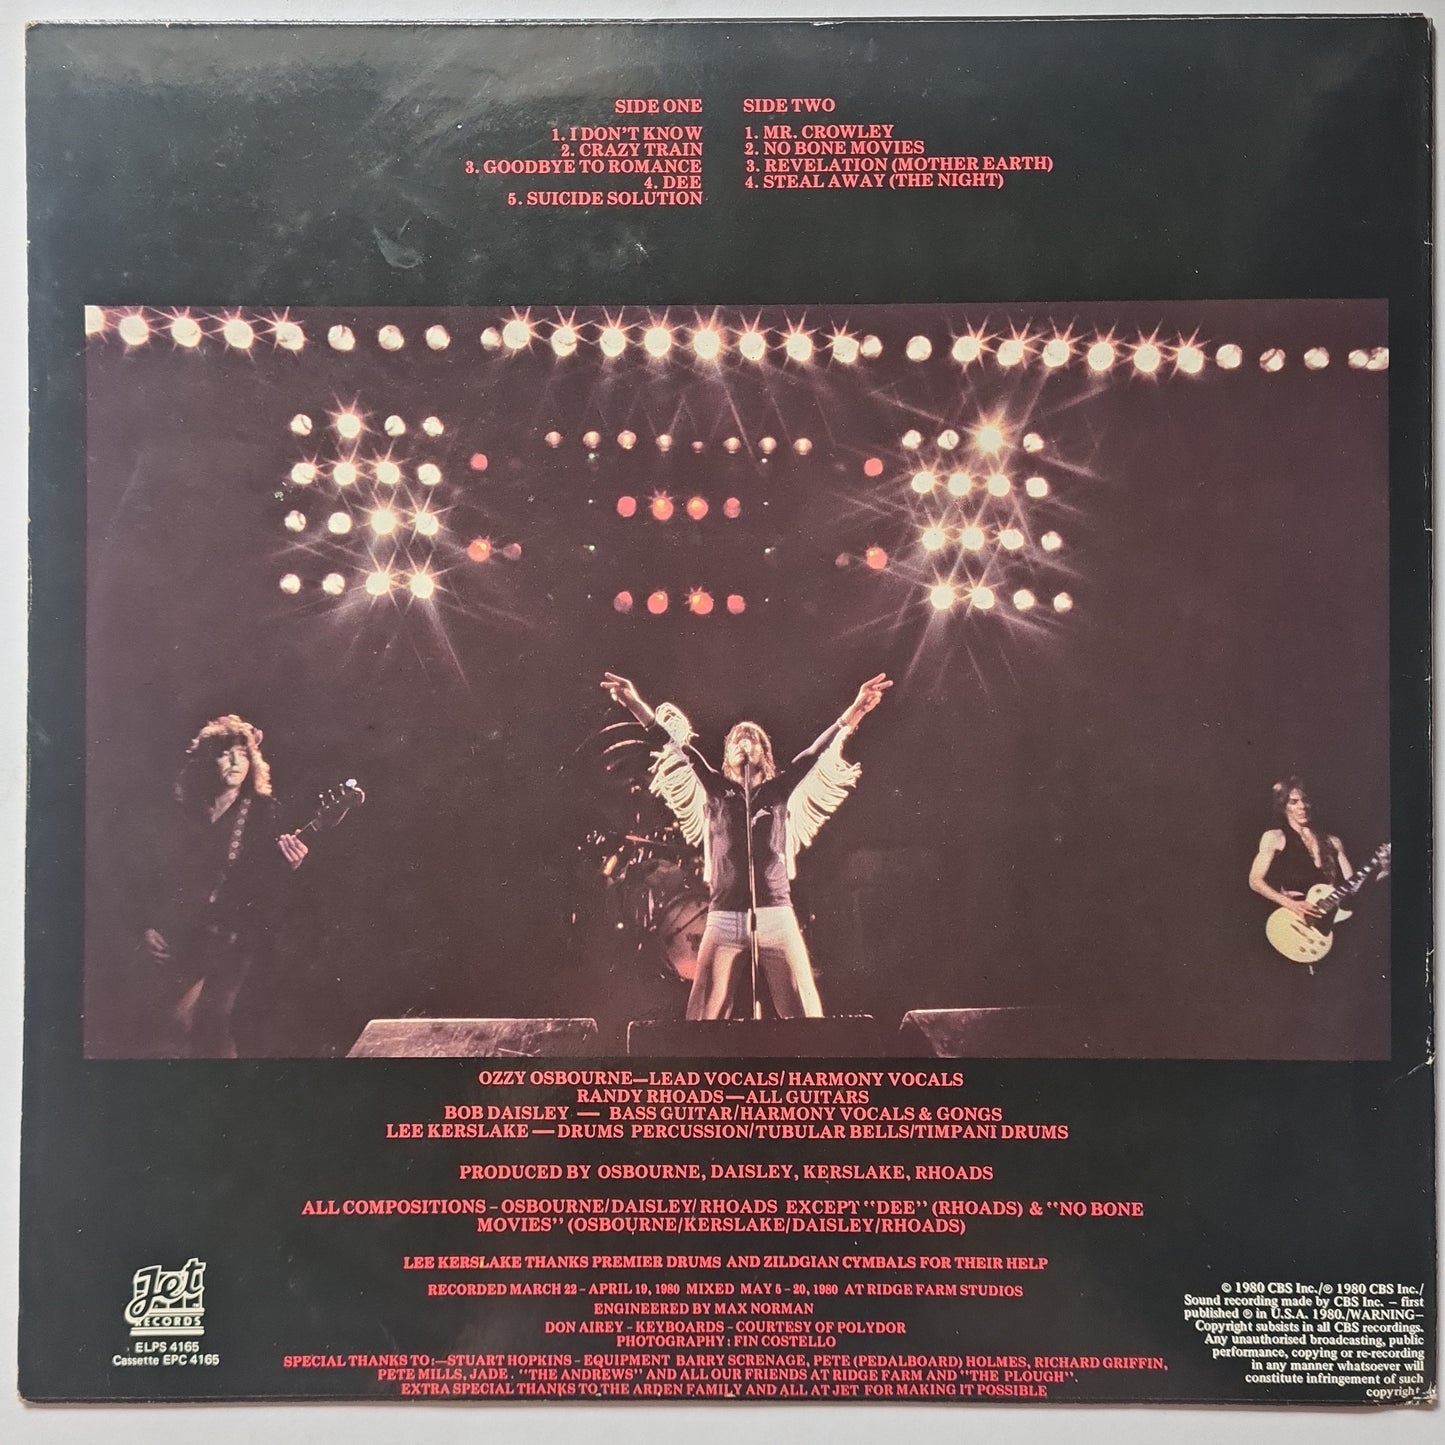 Ozzy Osbourne – Blizzard Of Ozz - 1981 - Australian Pressing - Vinyl Record